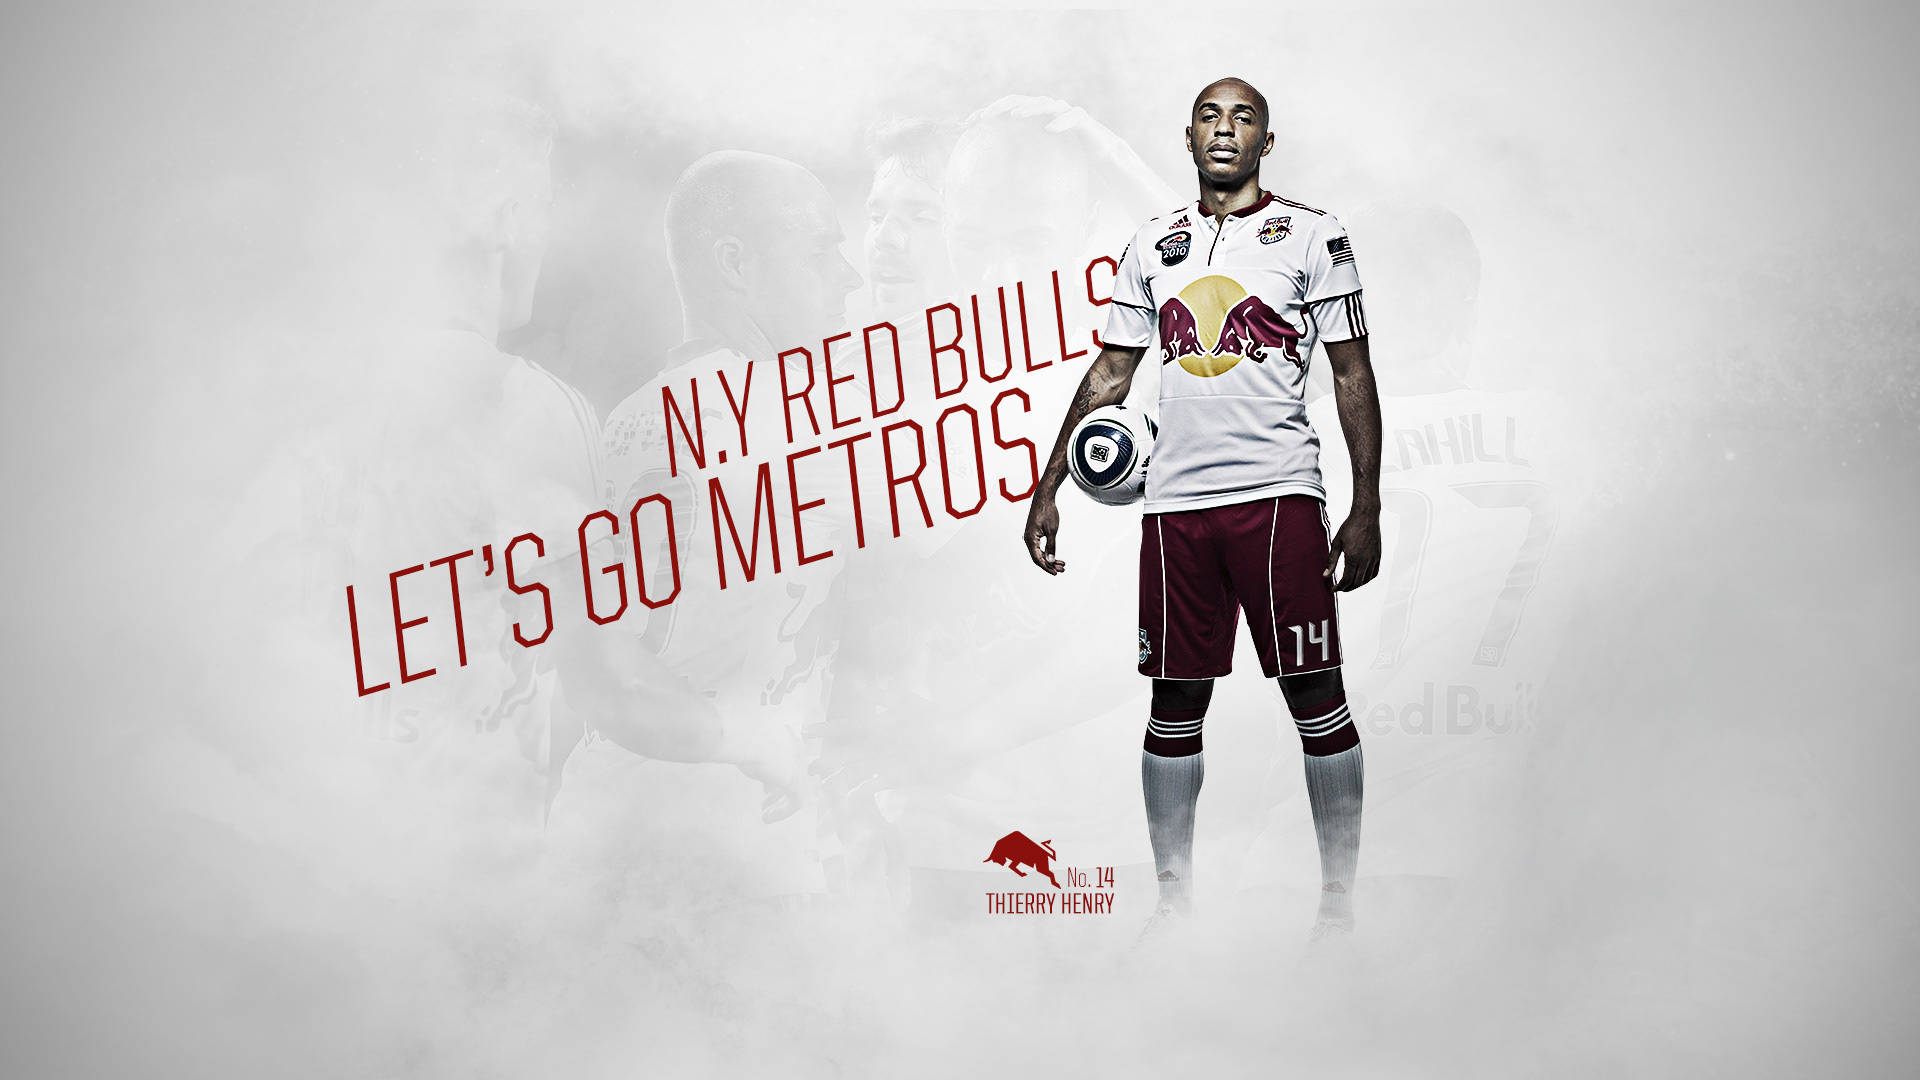 Nyayork Red Bulls Let's Go Metros. Wallpaper